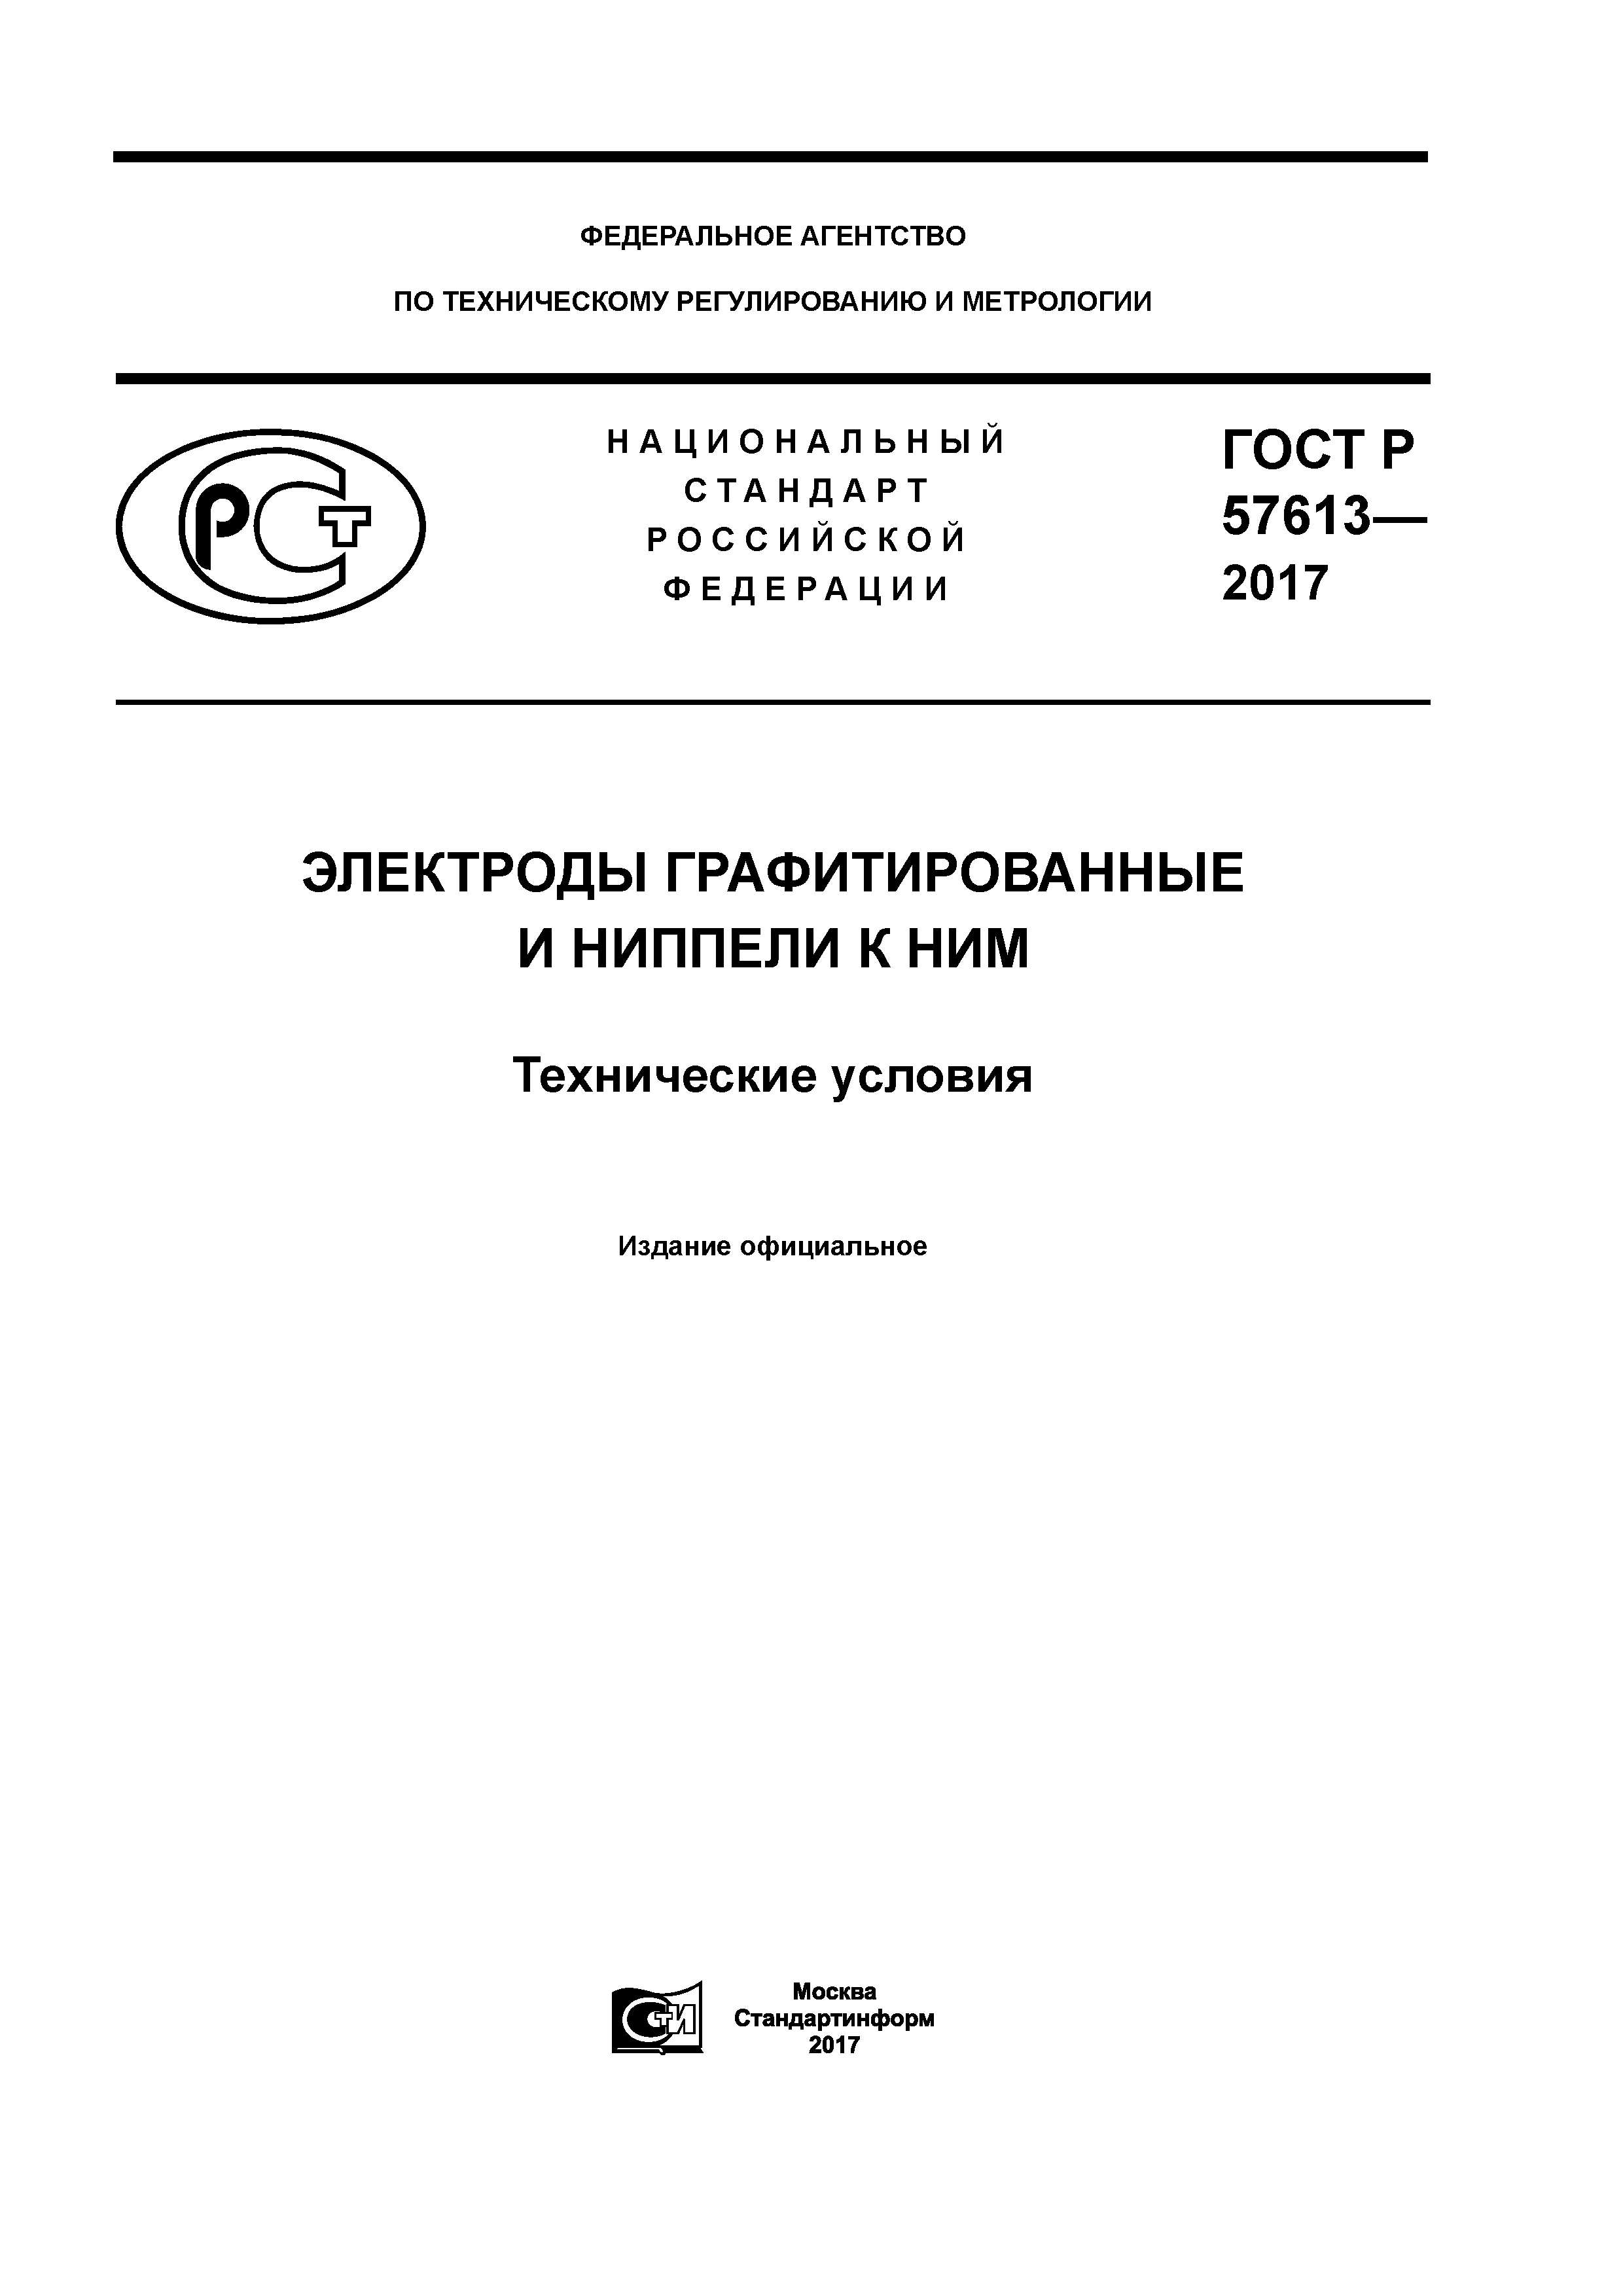 ГОСТ Р 57613-2017